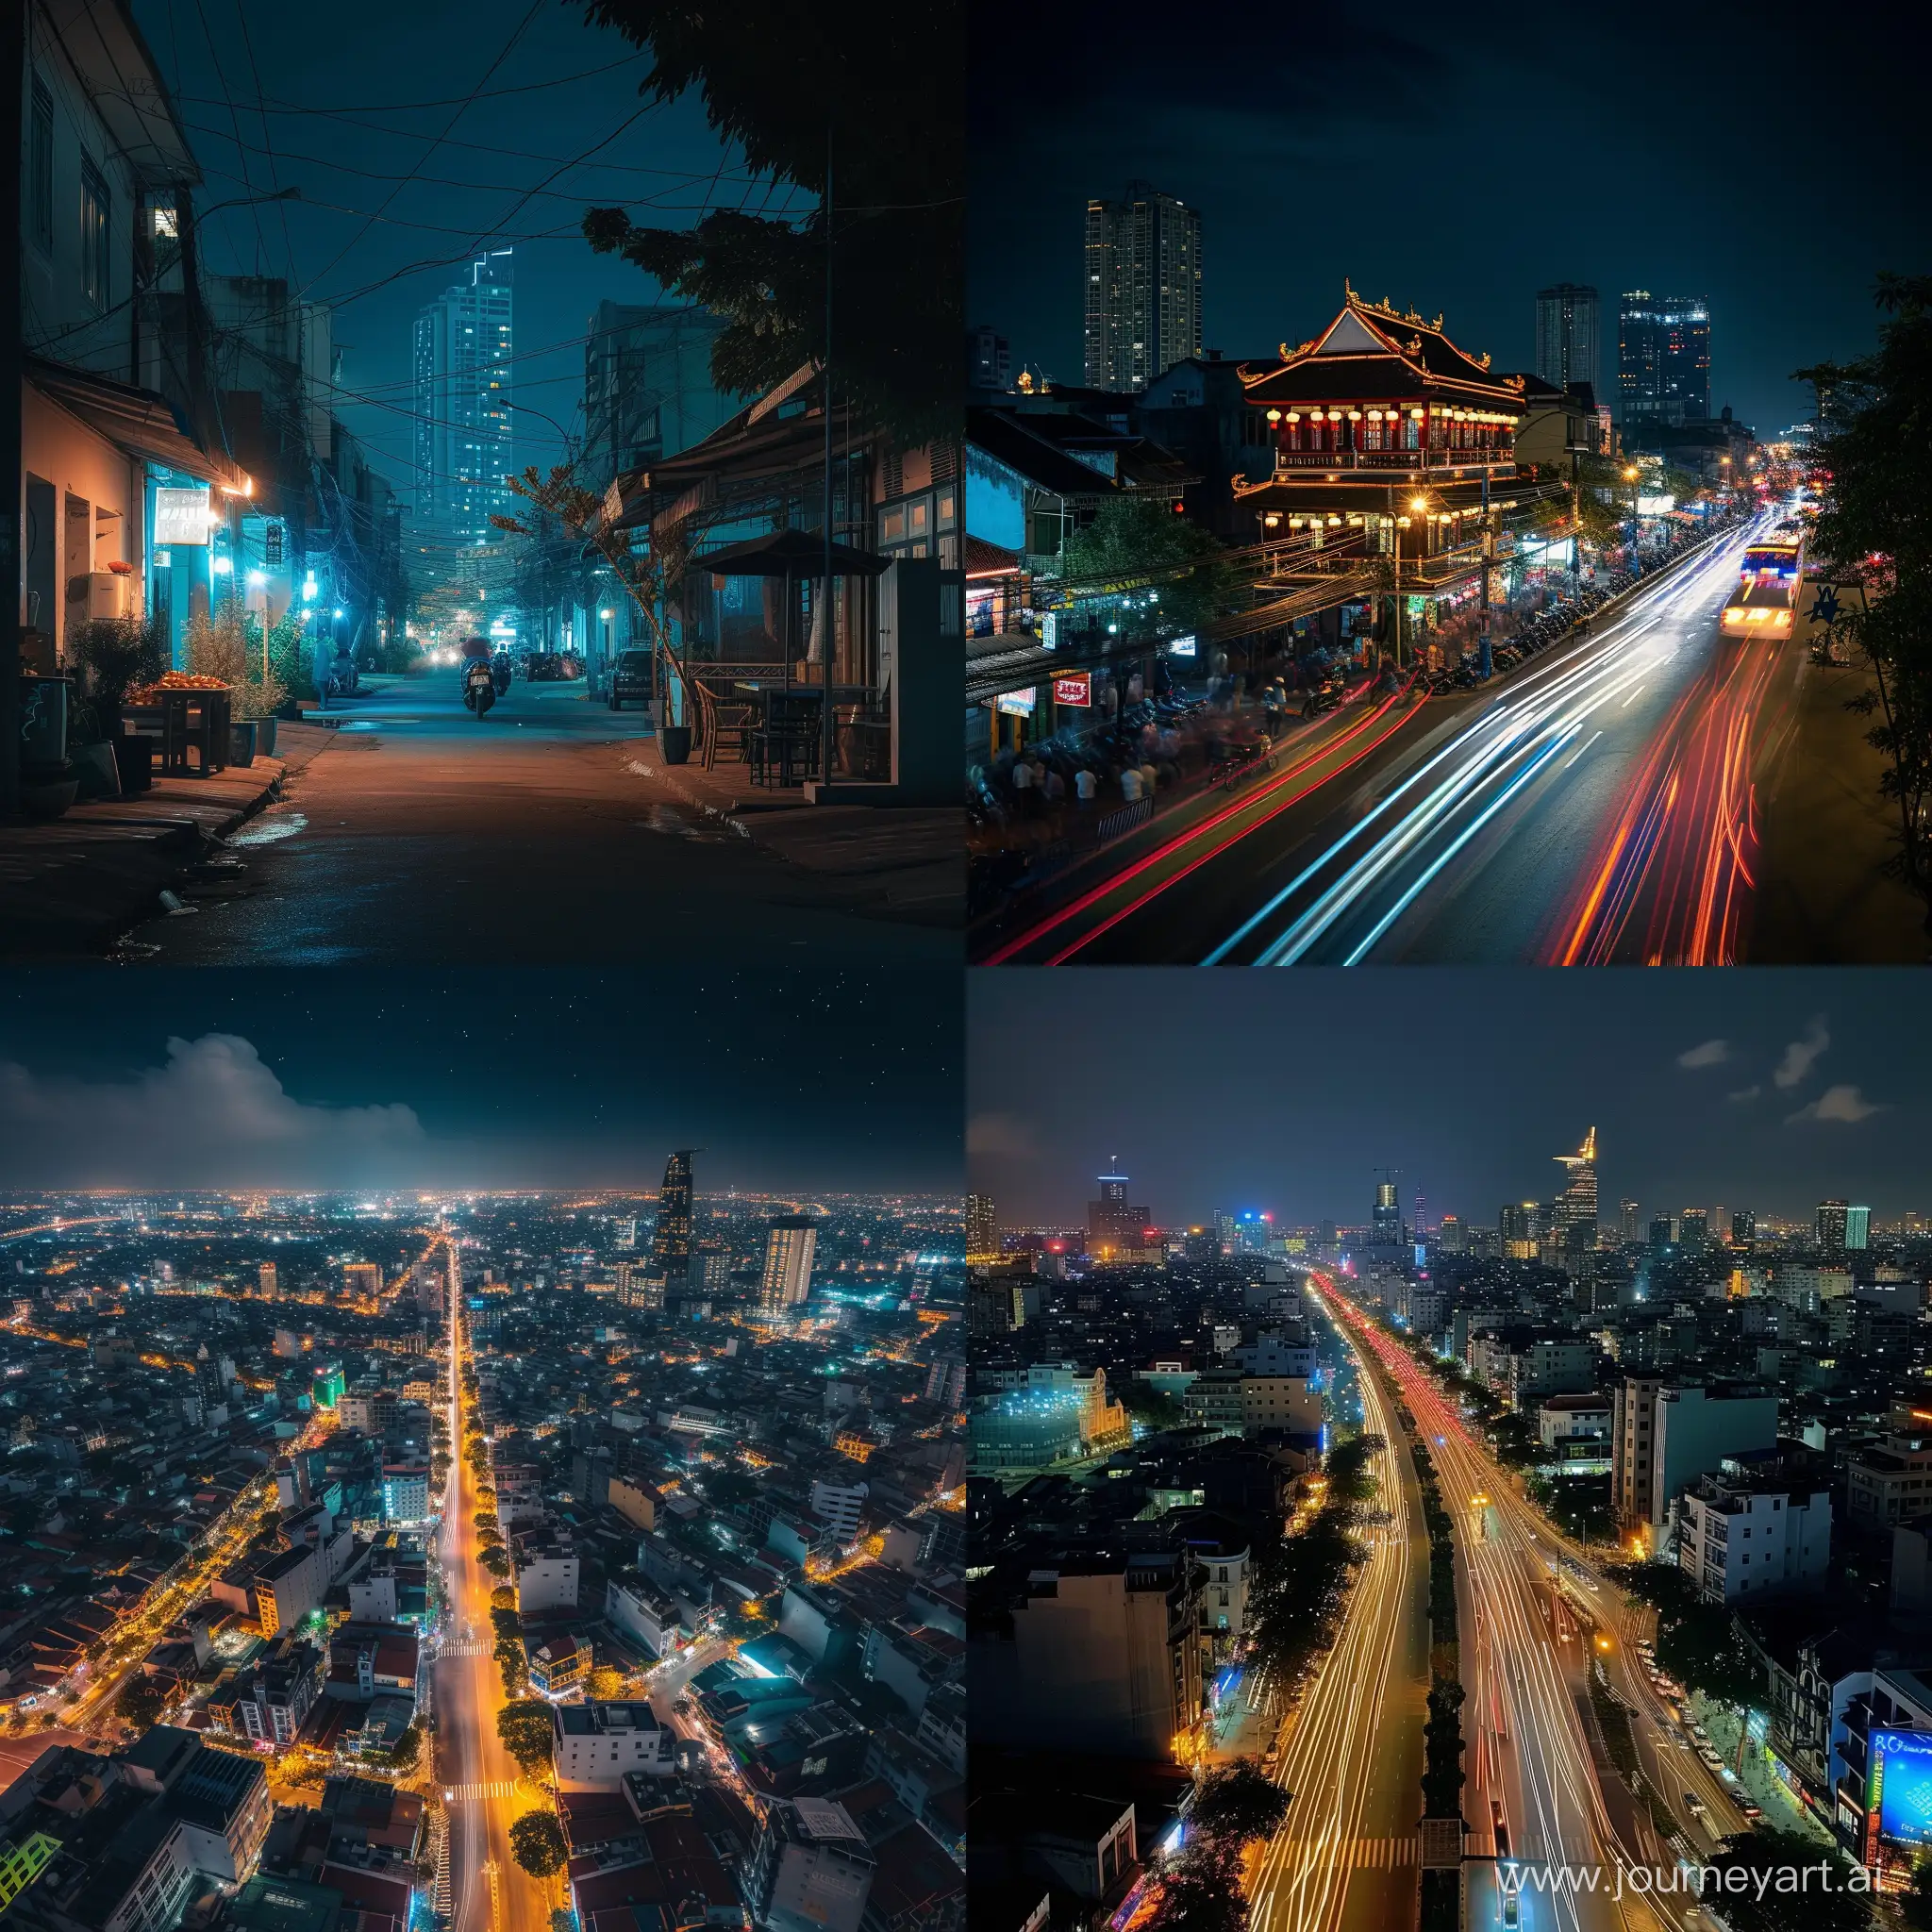 photography style, Pho Tay Bui Vien Distrist 1 Ho Chi Minh city, Viet Nam at night --v 6.0 --style raw

